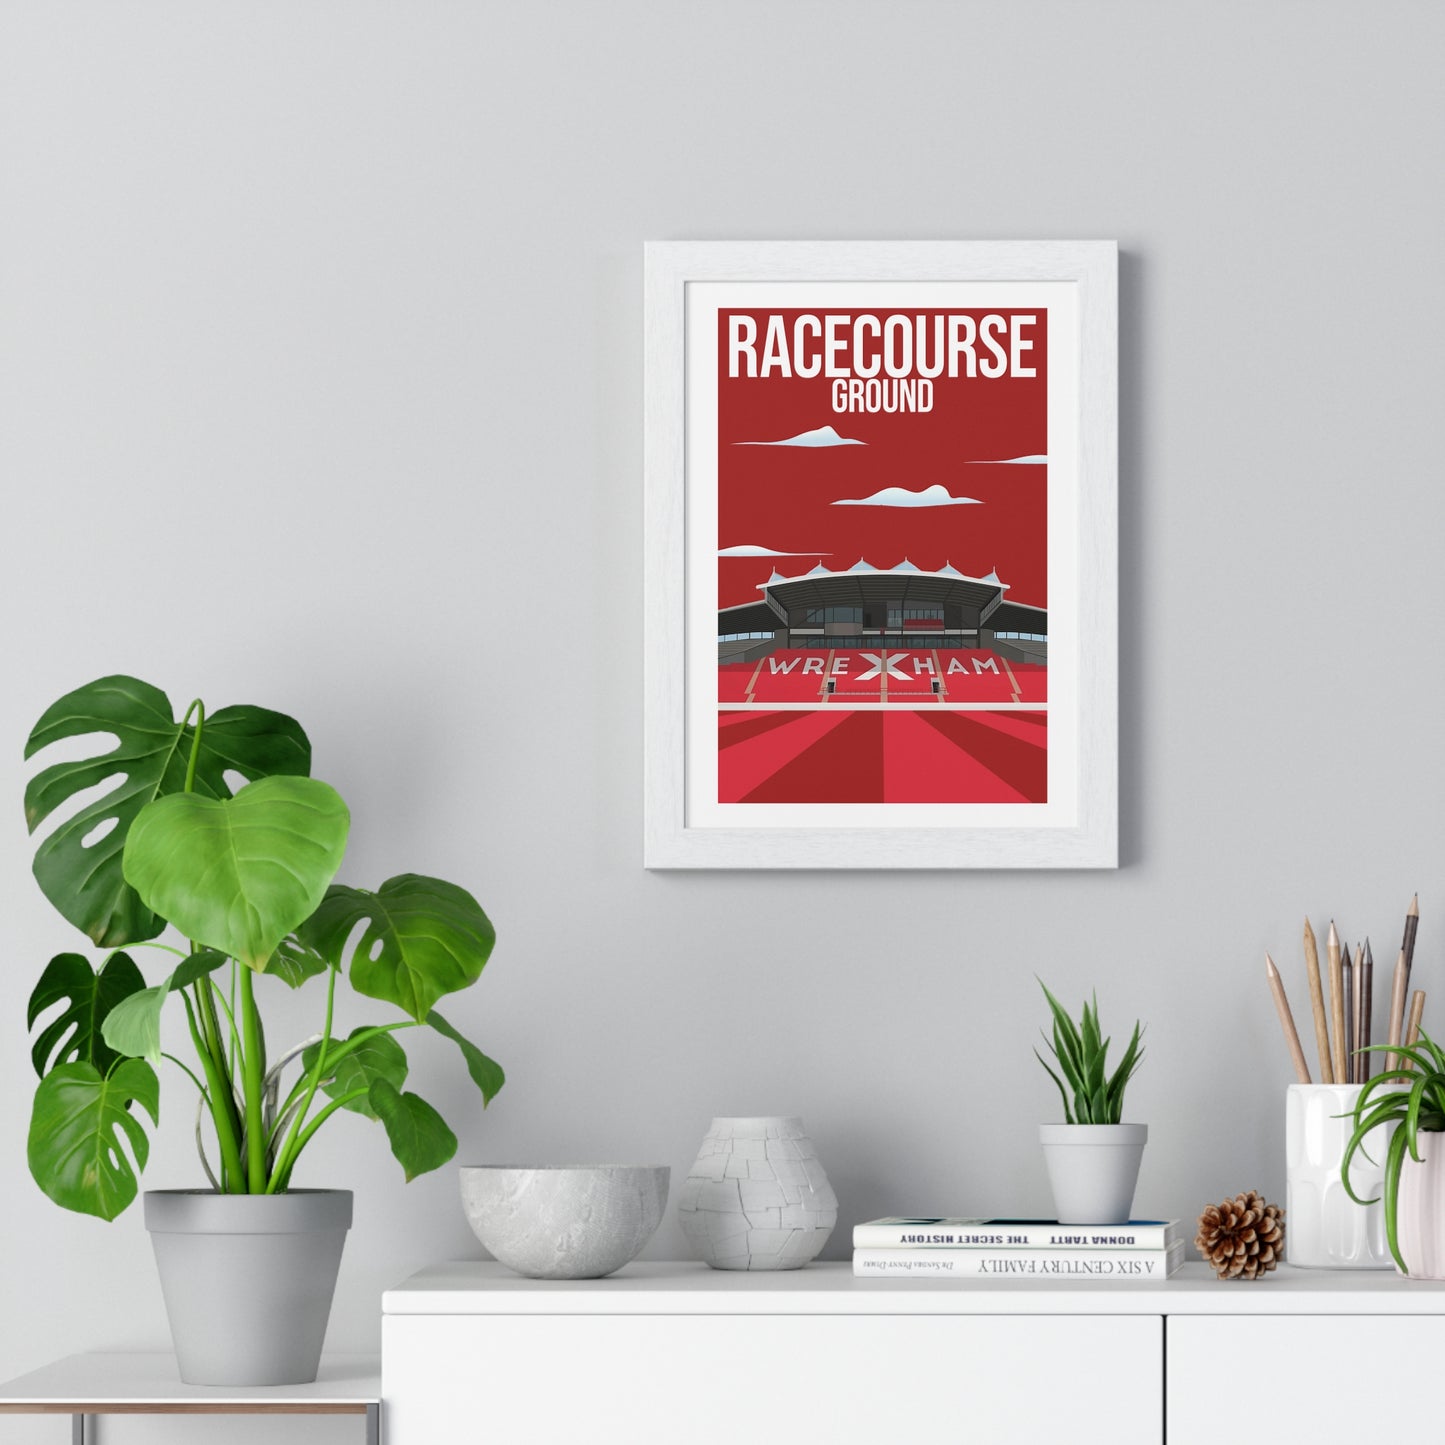 Racecourse Ground Poster